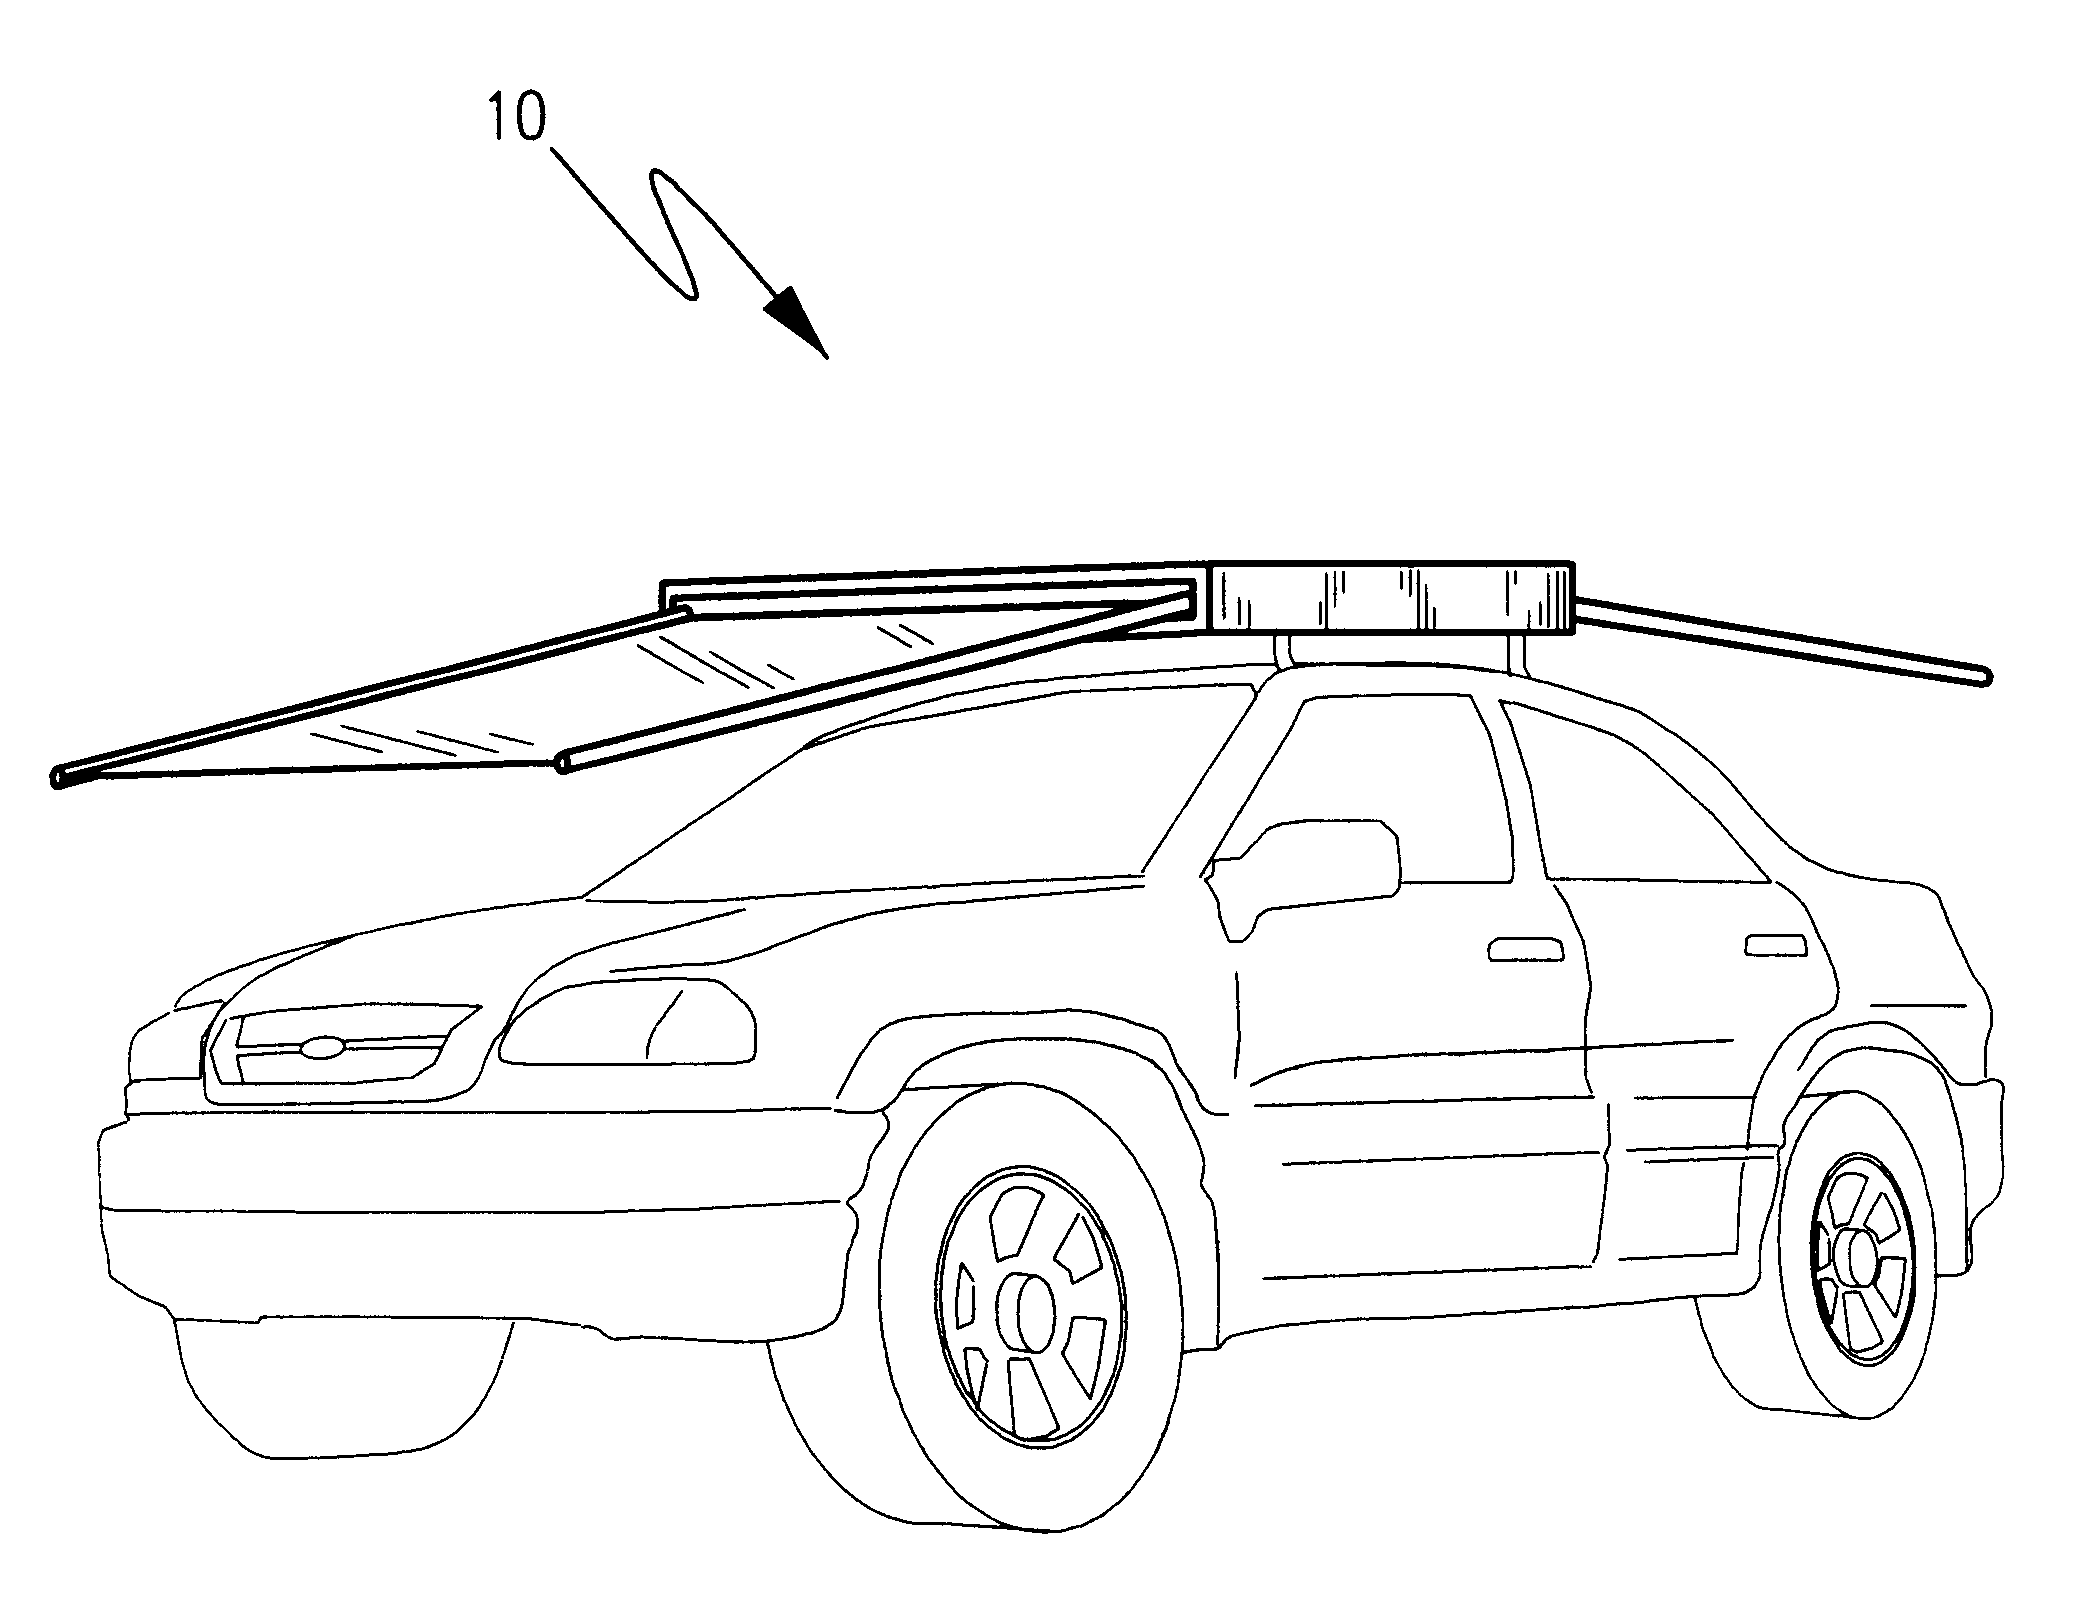 Dual panel retracting vehicle shade